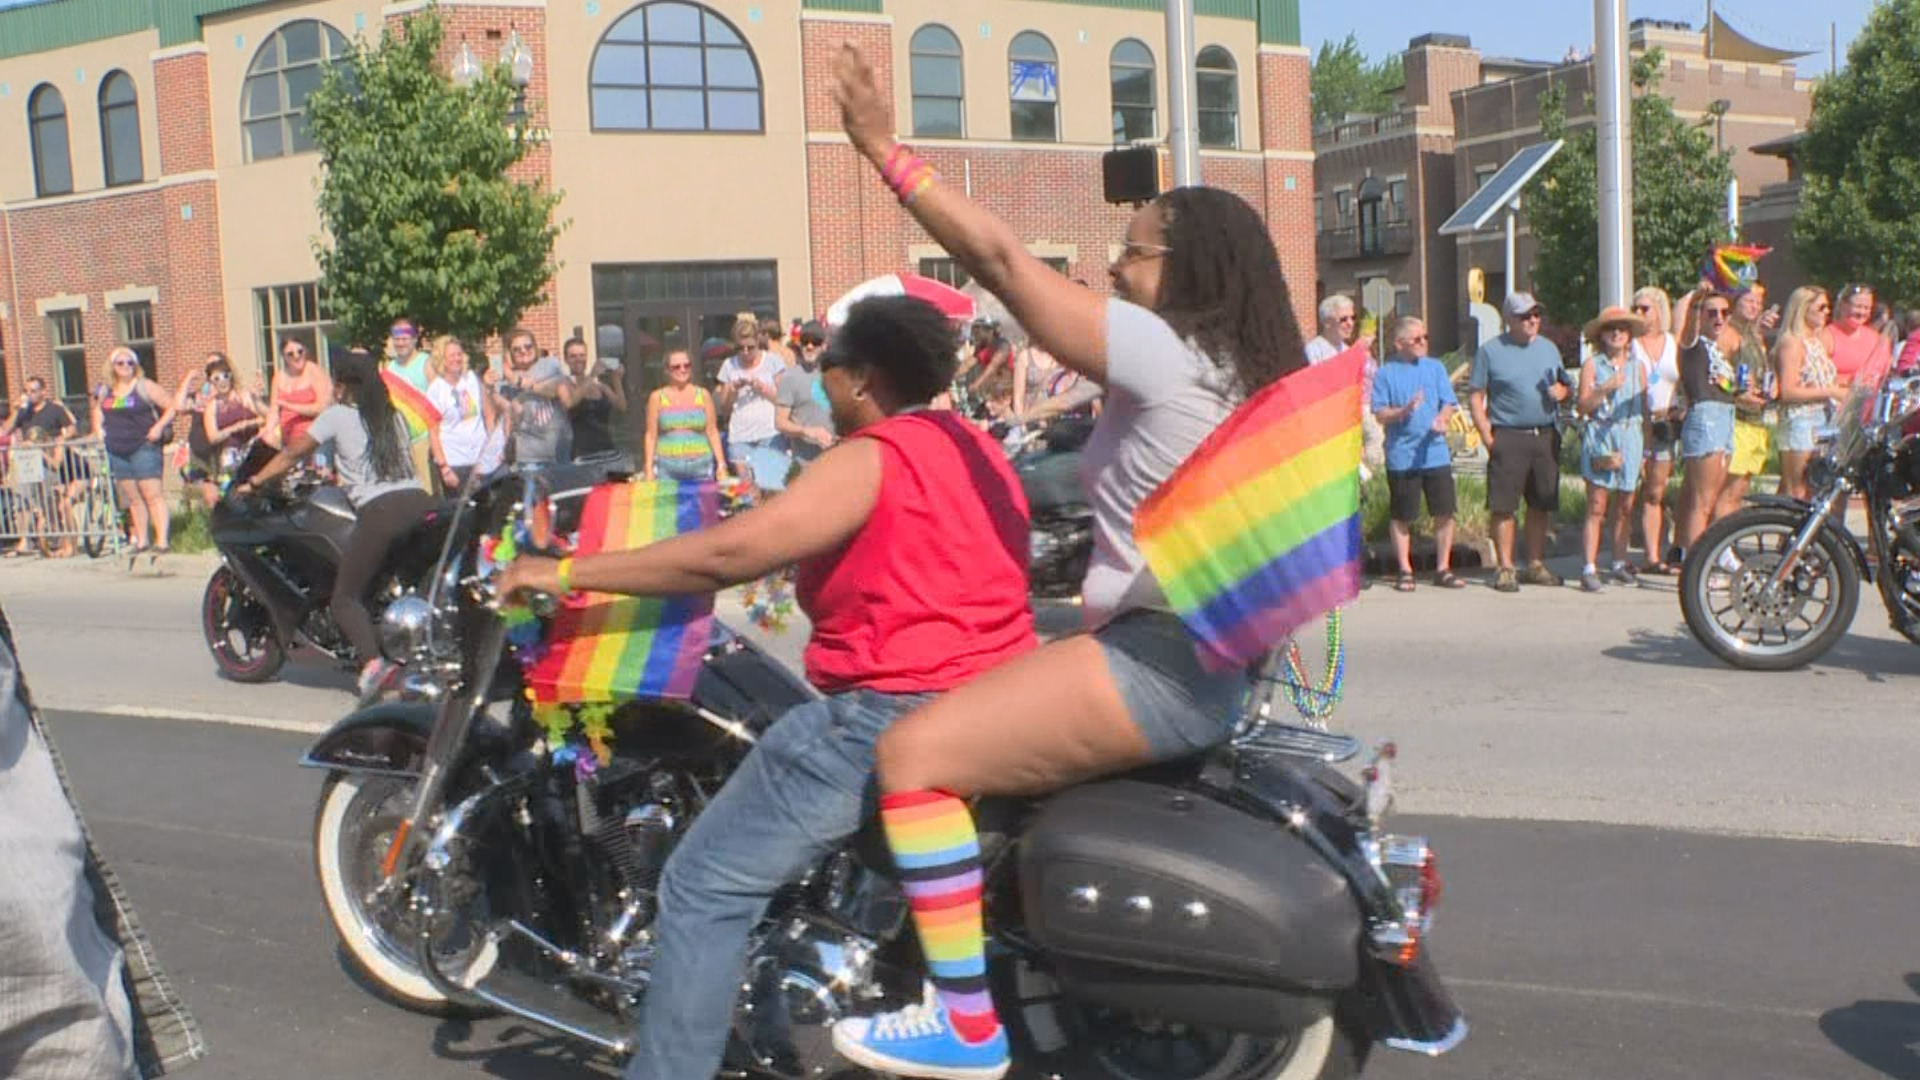 Preparations underway for Saturday's Indy Pride Parade, Festival